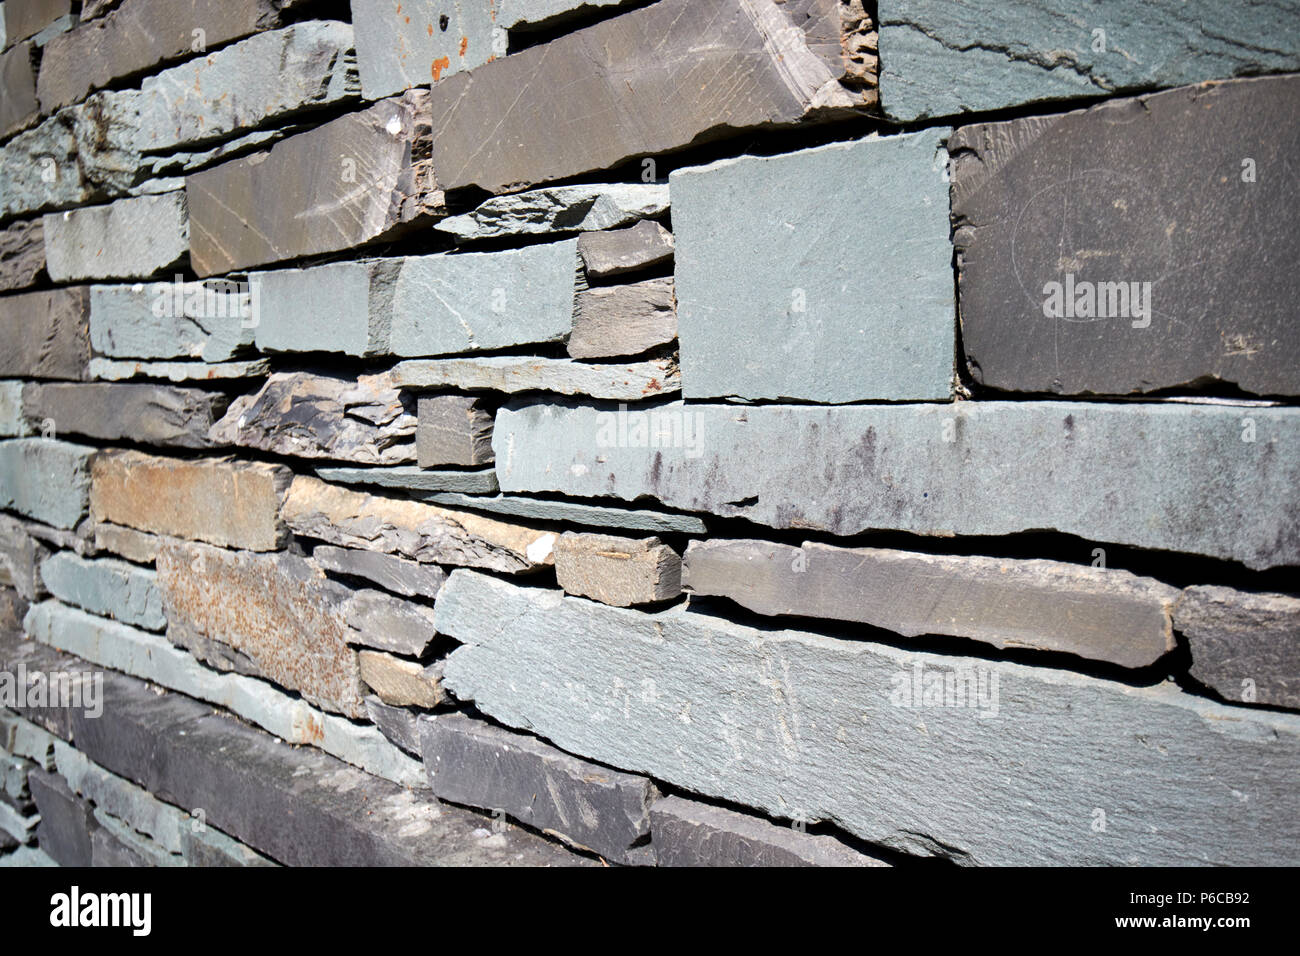 wall of building built of slate lakeland stone construction Ambleside lake district cumbria england uk Stock Photo